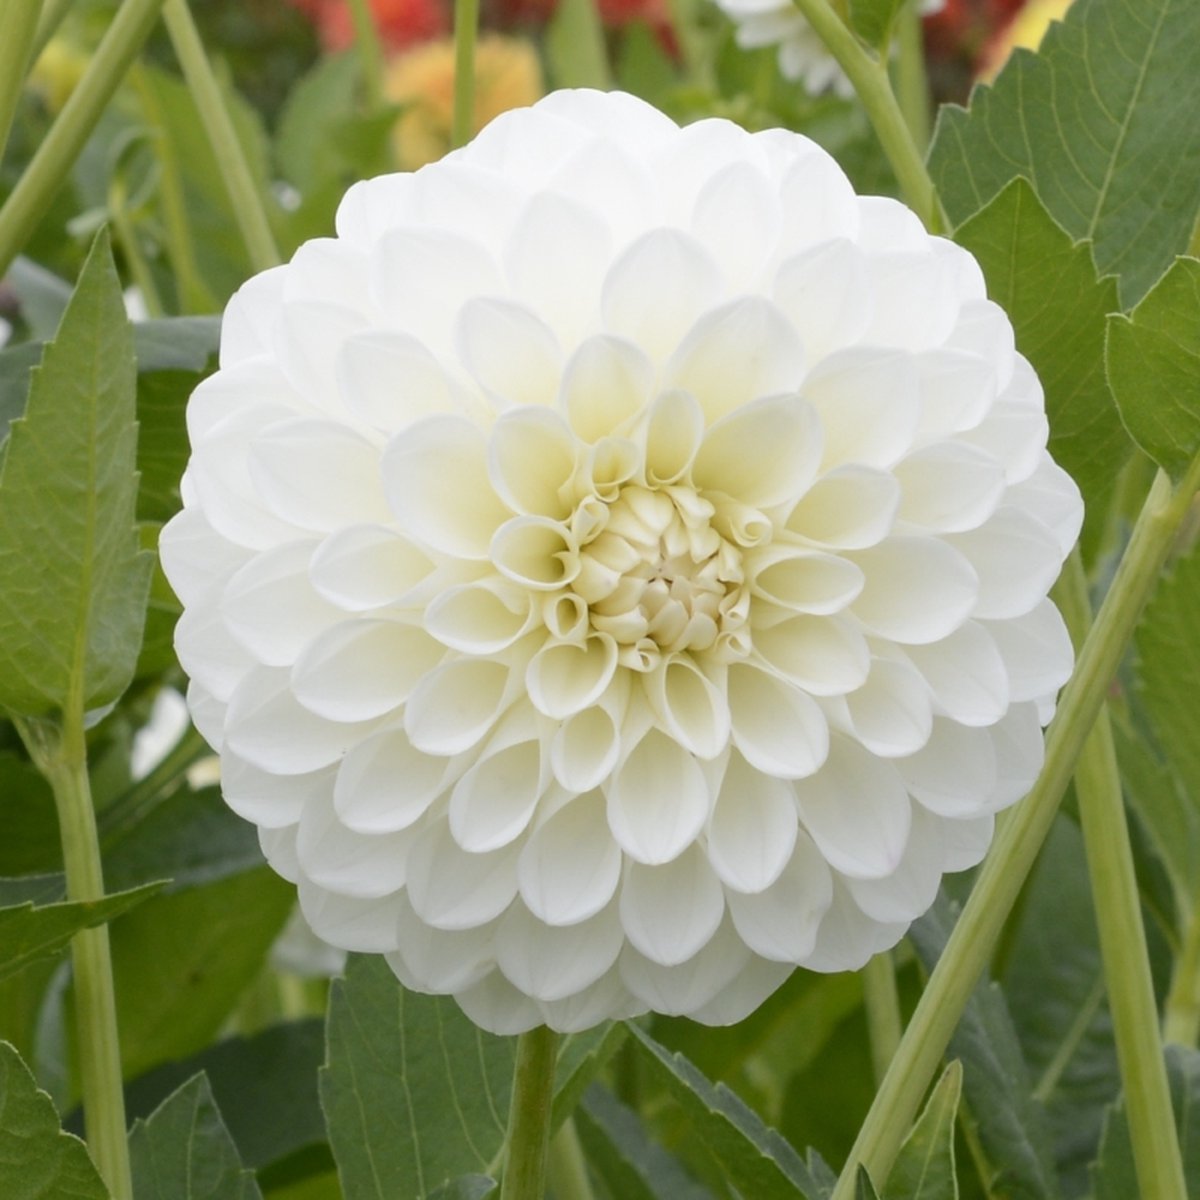 Dahlia Boom Boom White | 6 stuks | Bal Dahlia | Knol | Snijbloem | Wit | Dahlia Knollen van Top Kwaliteit | 100% Bloeigarantie | QFB Gardening